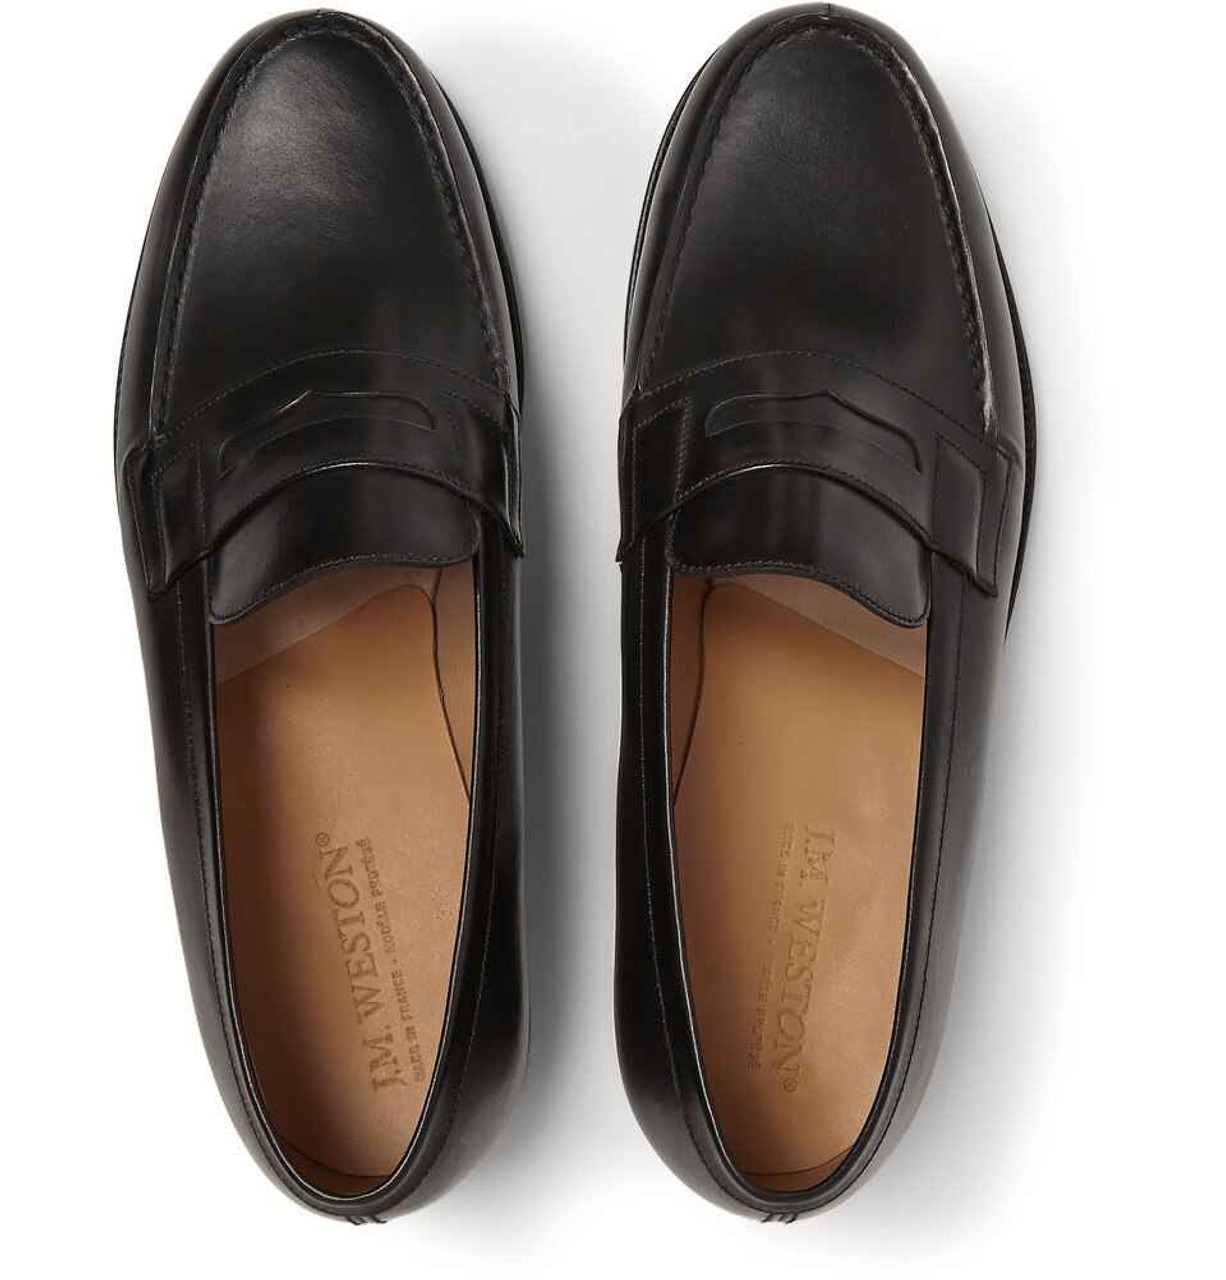 Brand new JM Weston 180 loafers - Black